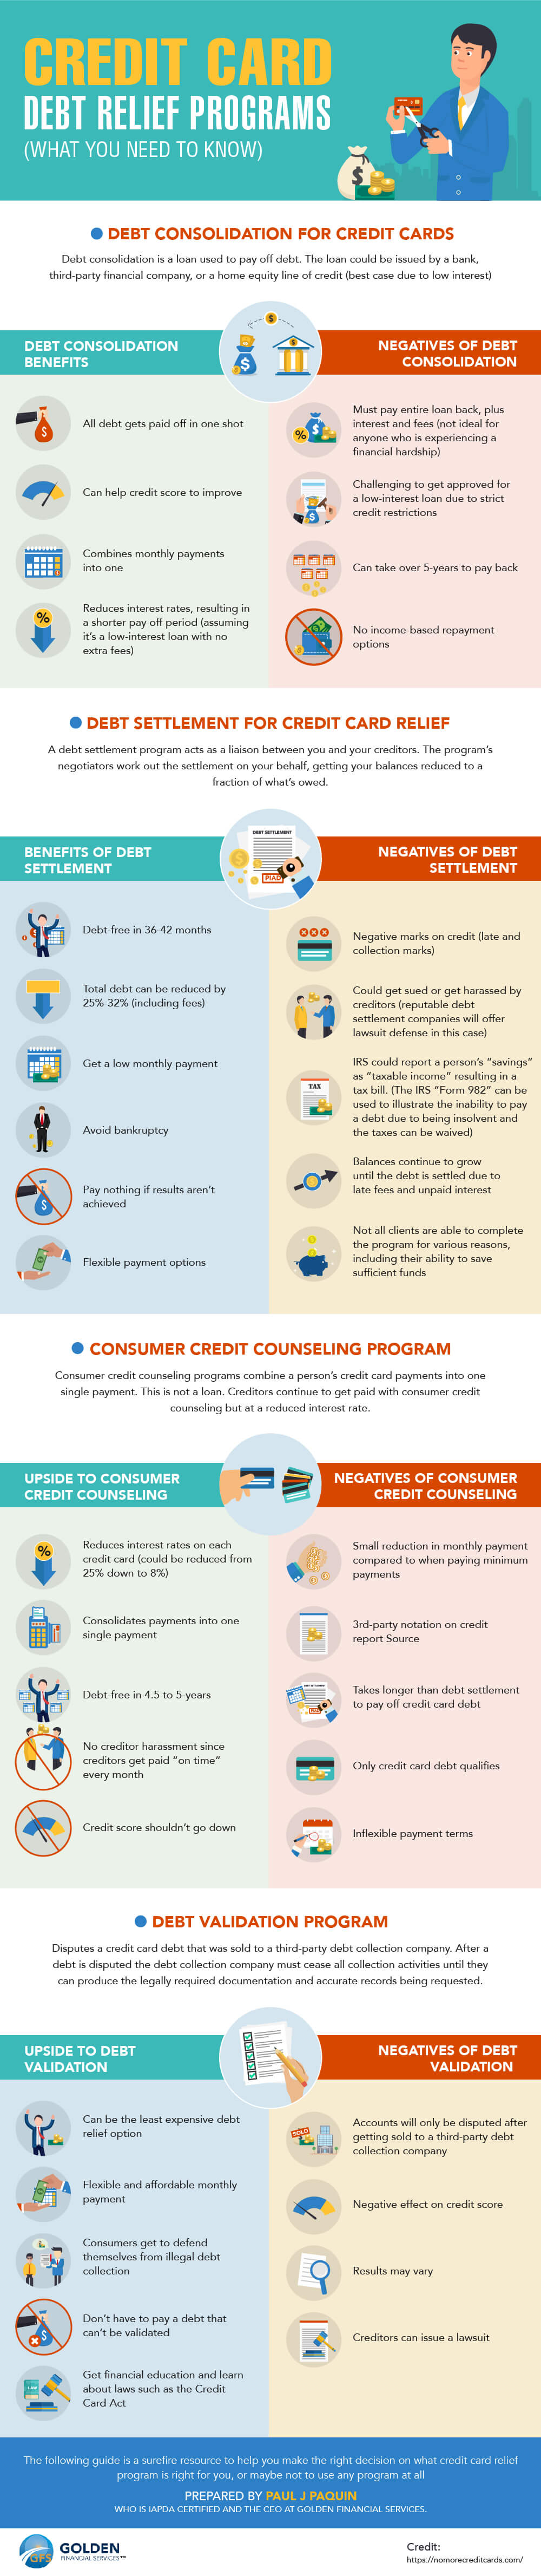 Credit Card Loans & Alternative Options